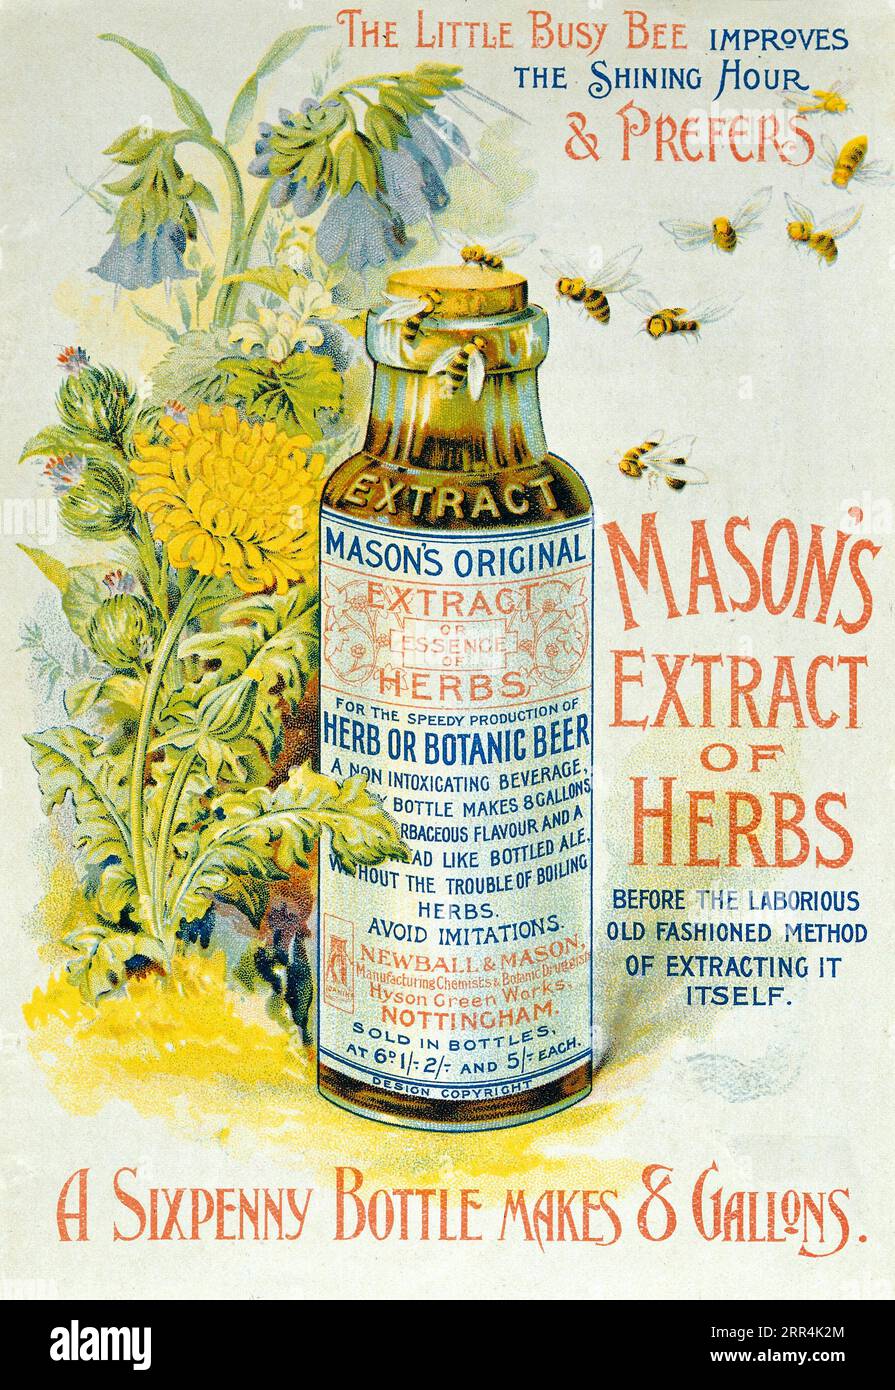 Victorian Era Magazine INSERT, Mason's Extract of Herbs for Botanic Beer, Vintage Advertising from c1900 Stockfoto